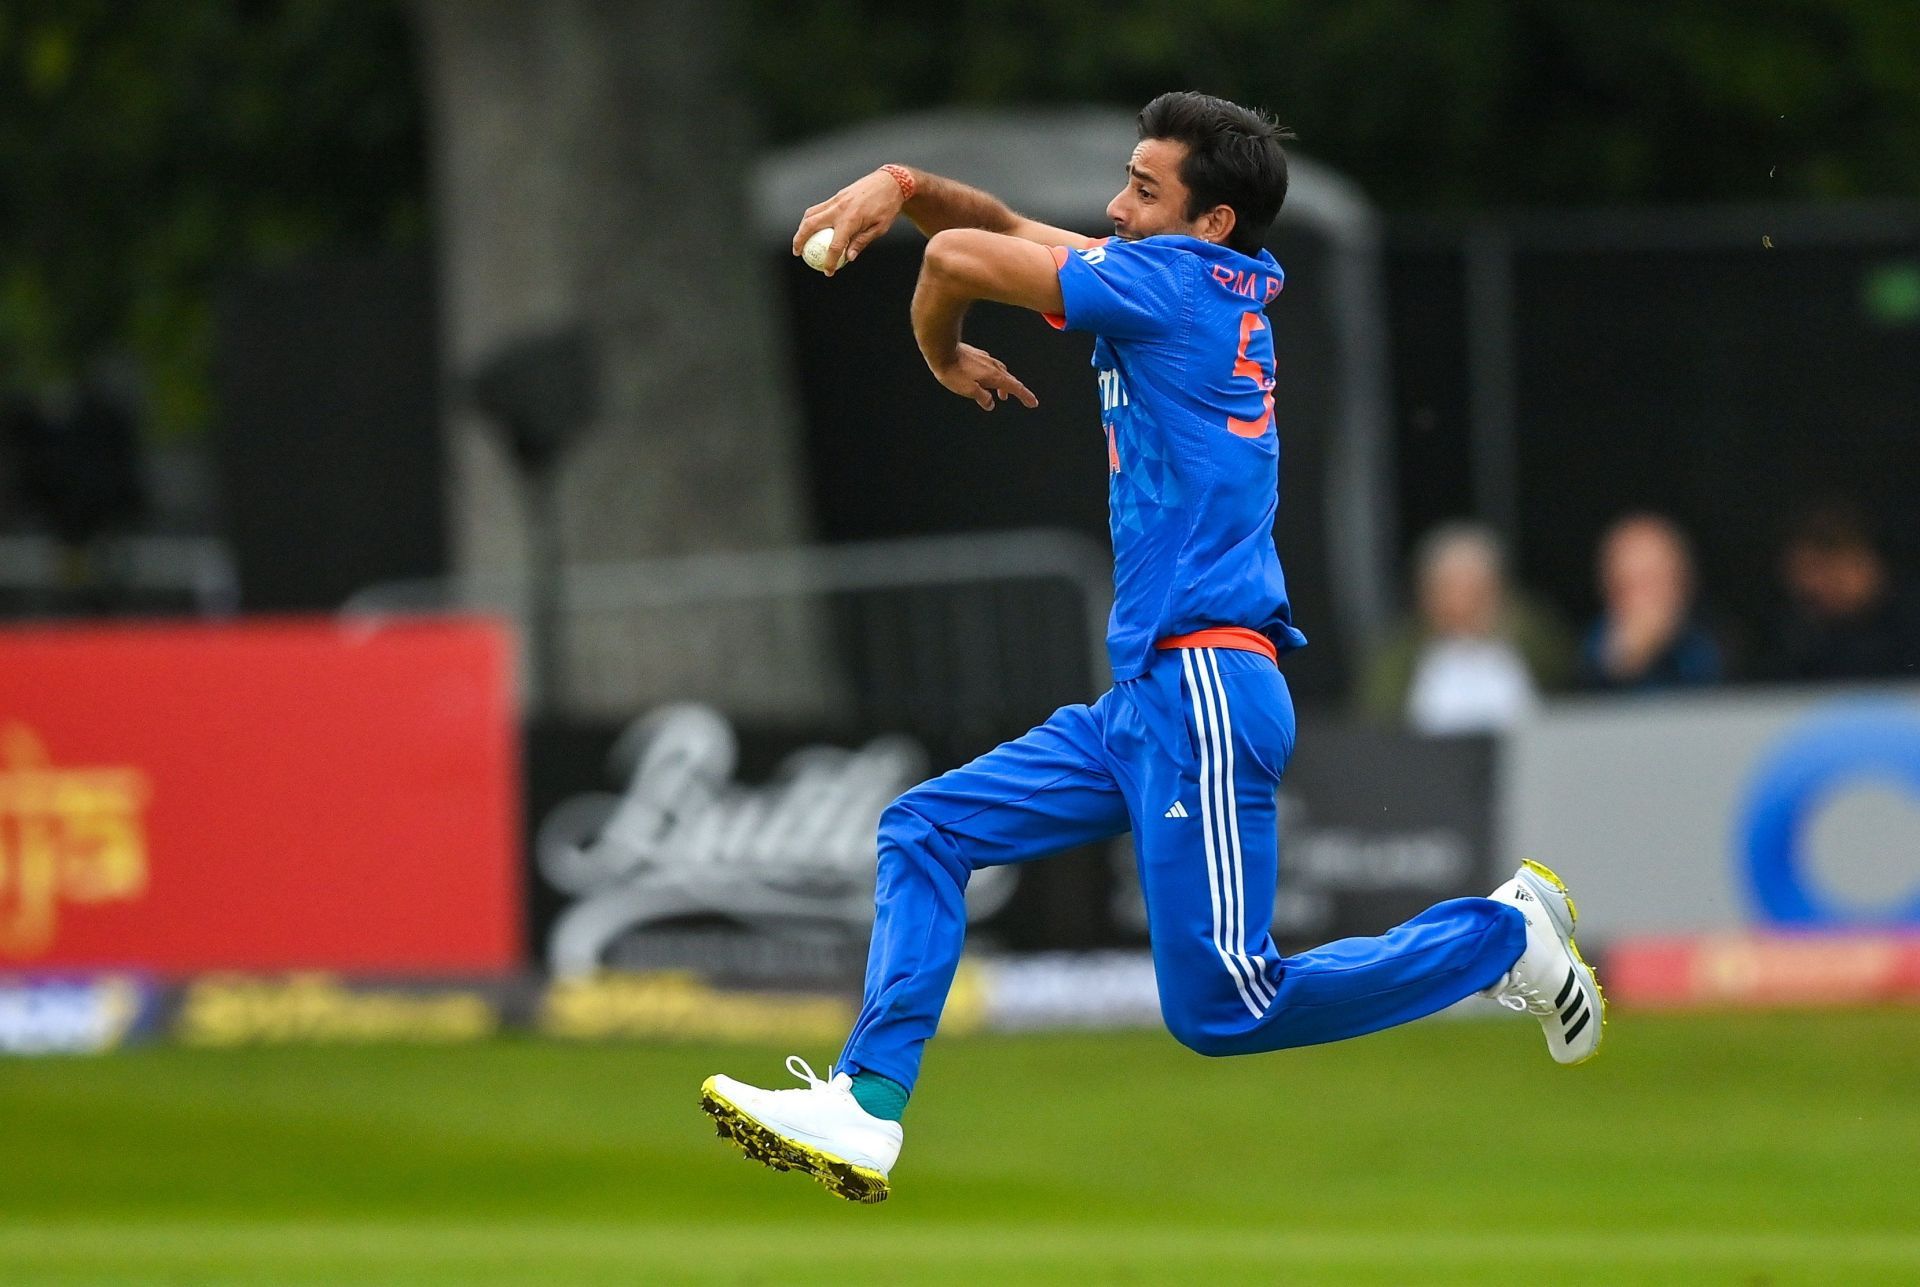 Ravi Bishnoi bowled an impressive spell in Friday&#039;s game. [P/C: BCCI]